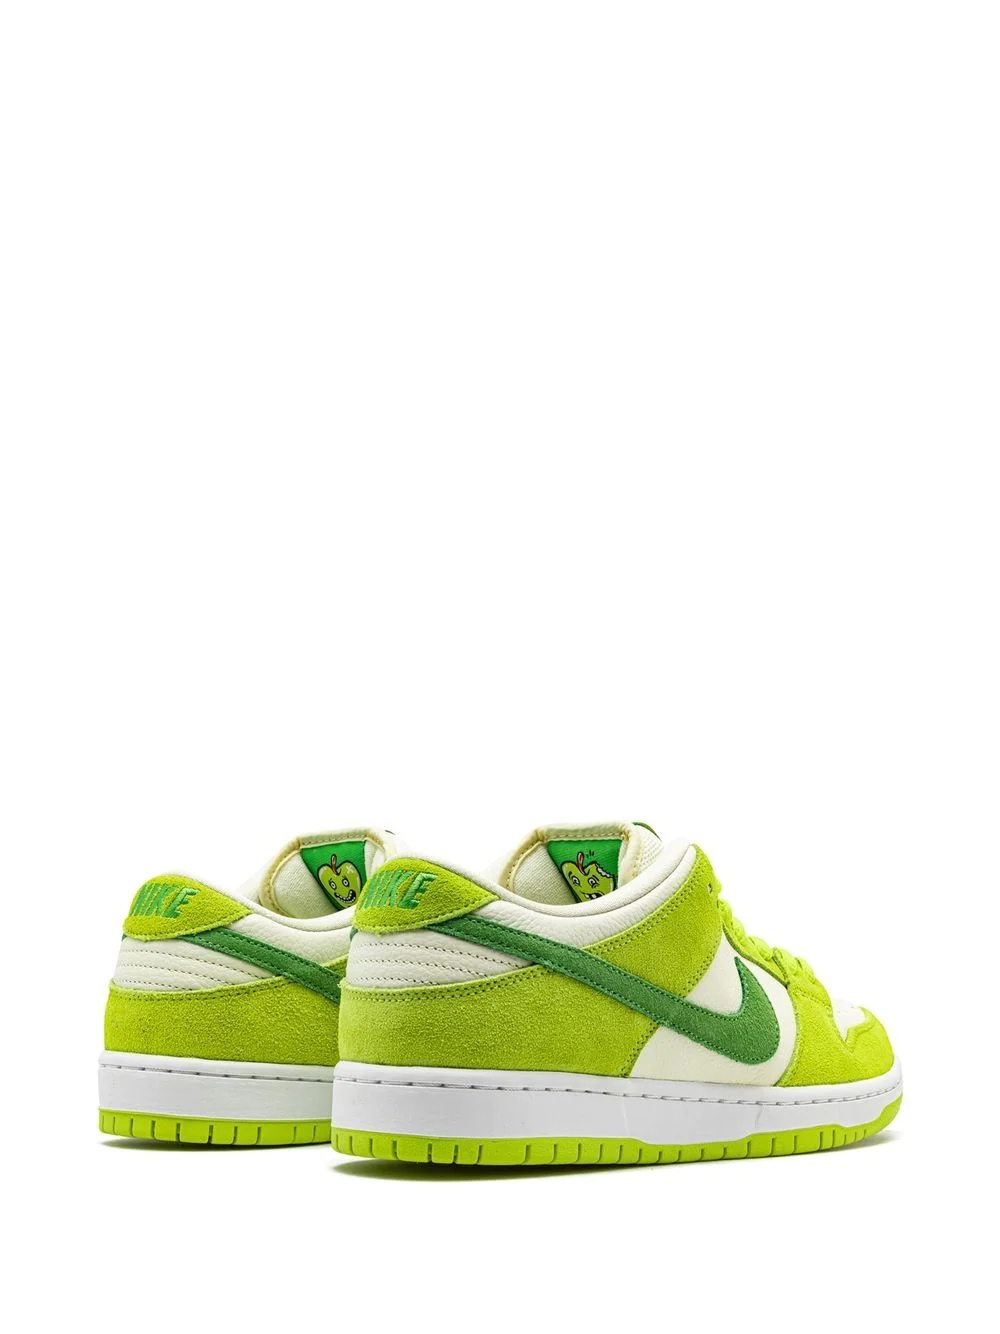 SB Dunk Low Pro "Green Apple" sneakers - 3